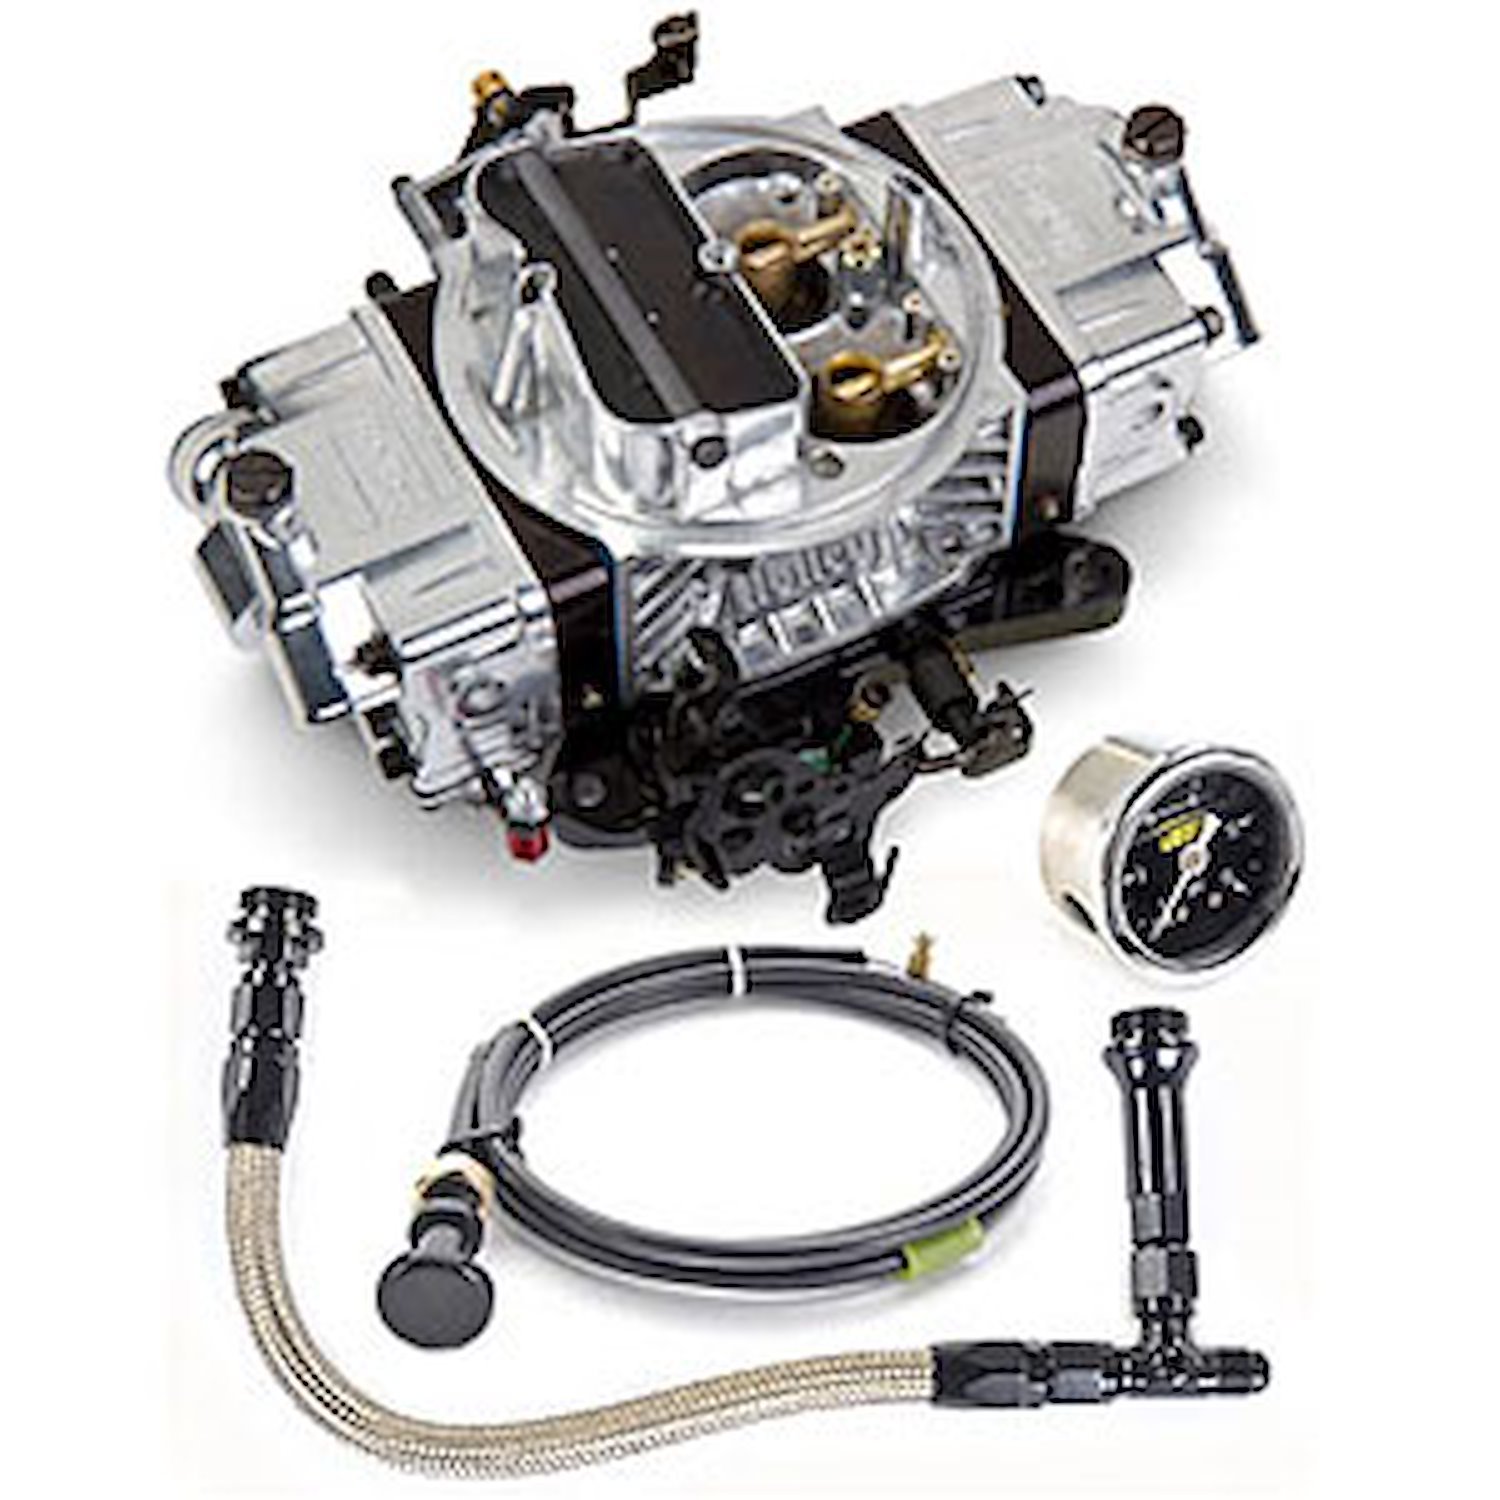 Ultra Double Pumper Carburetor Kit Includes: 750 cfm Carb with Manual Choke (Tumble Polish/Black )